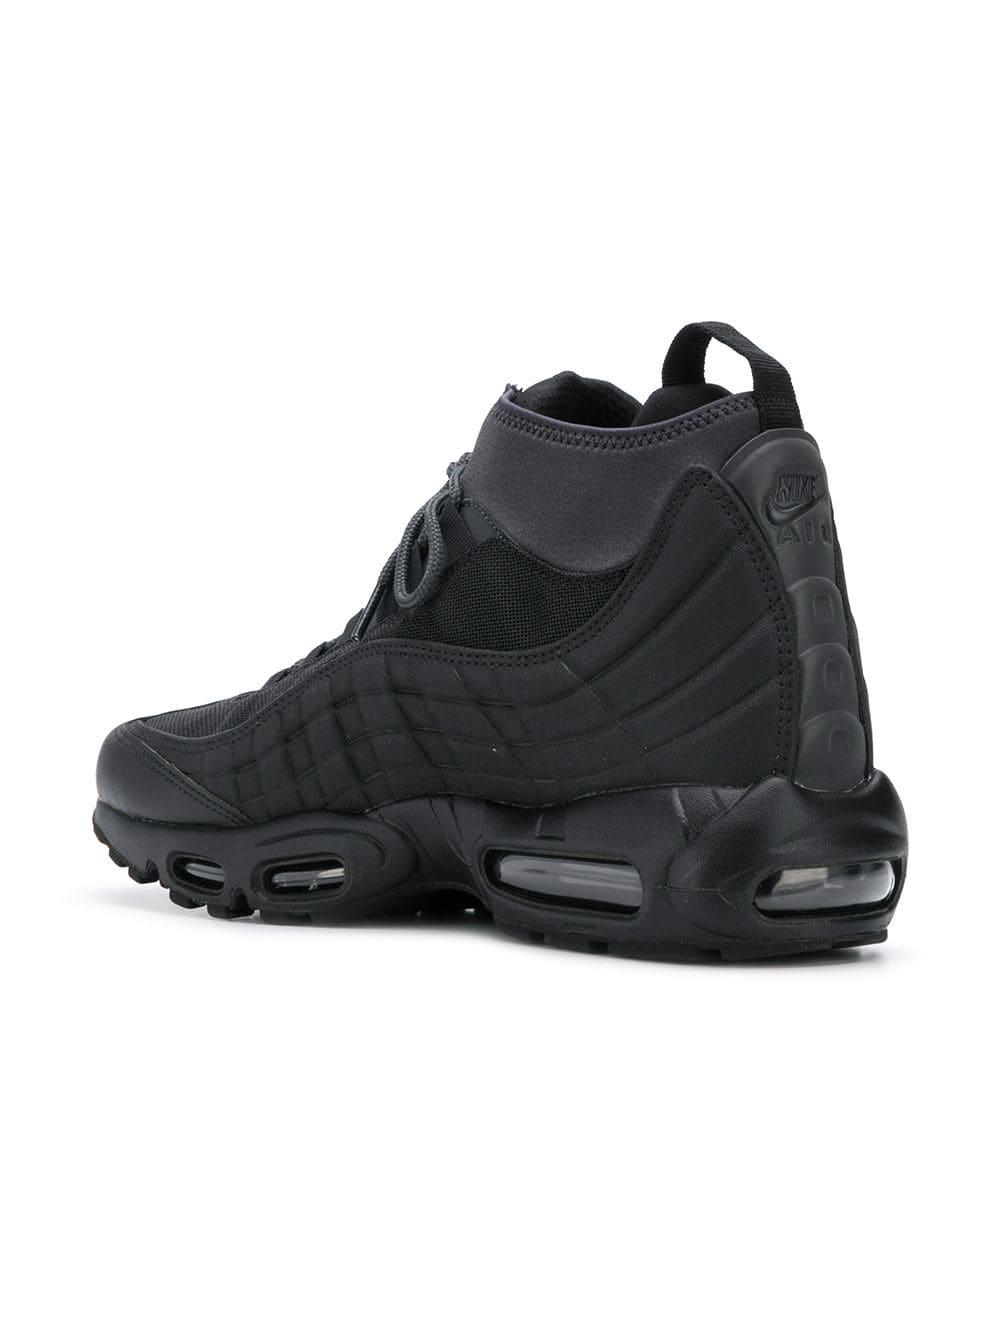 sneaker boots air max 95